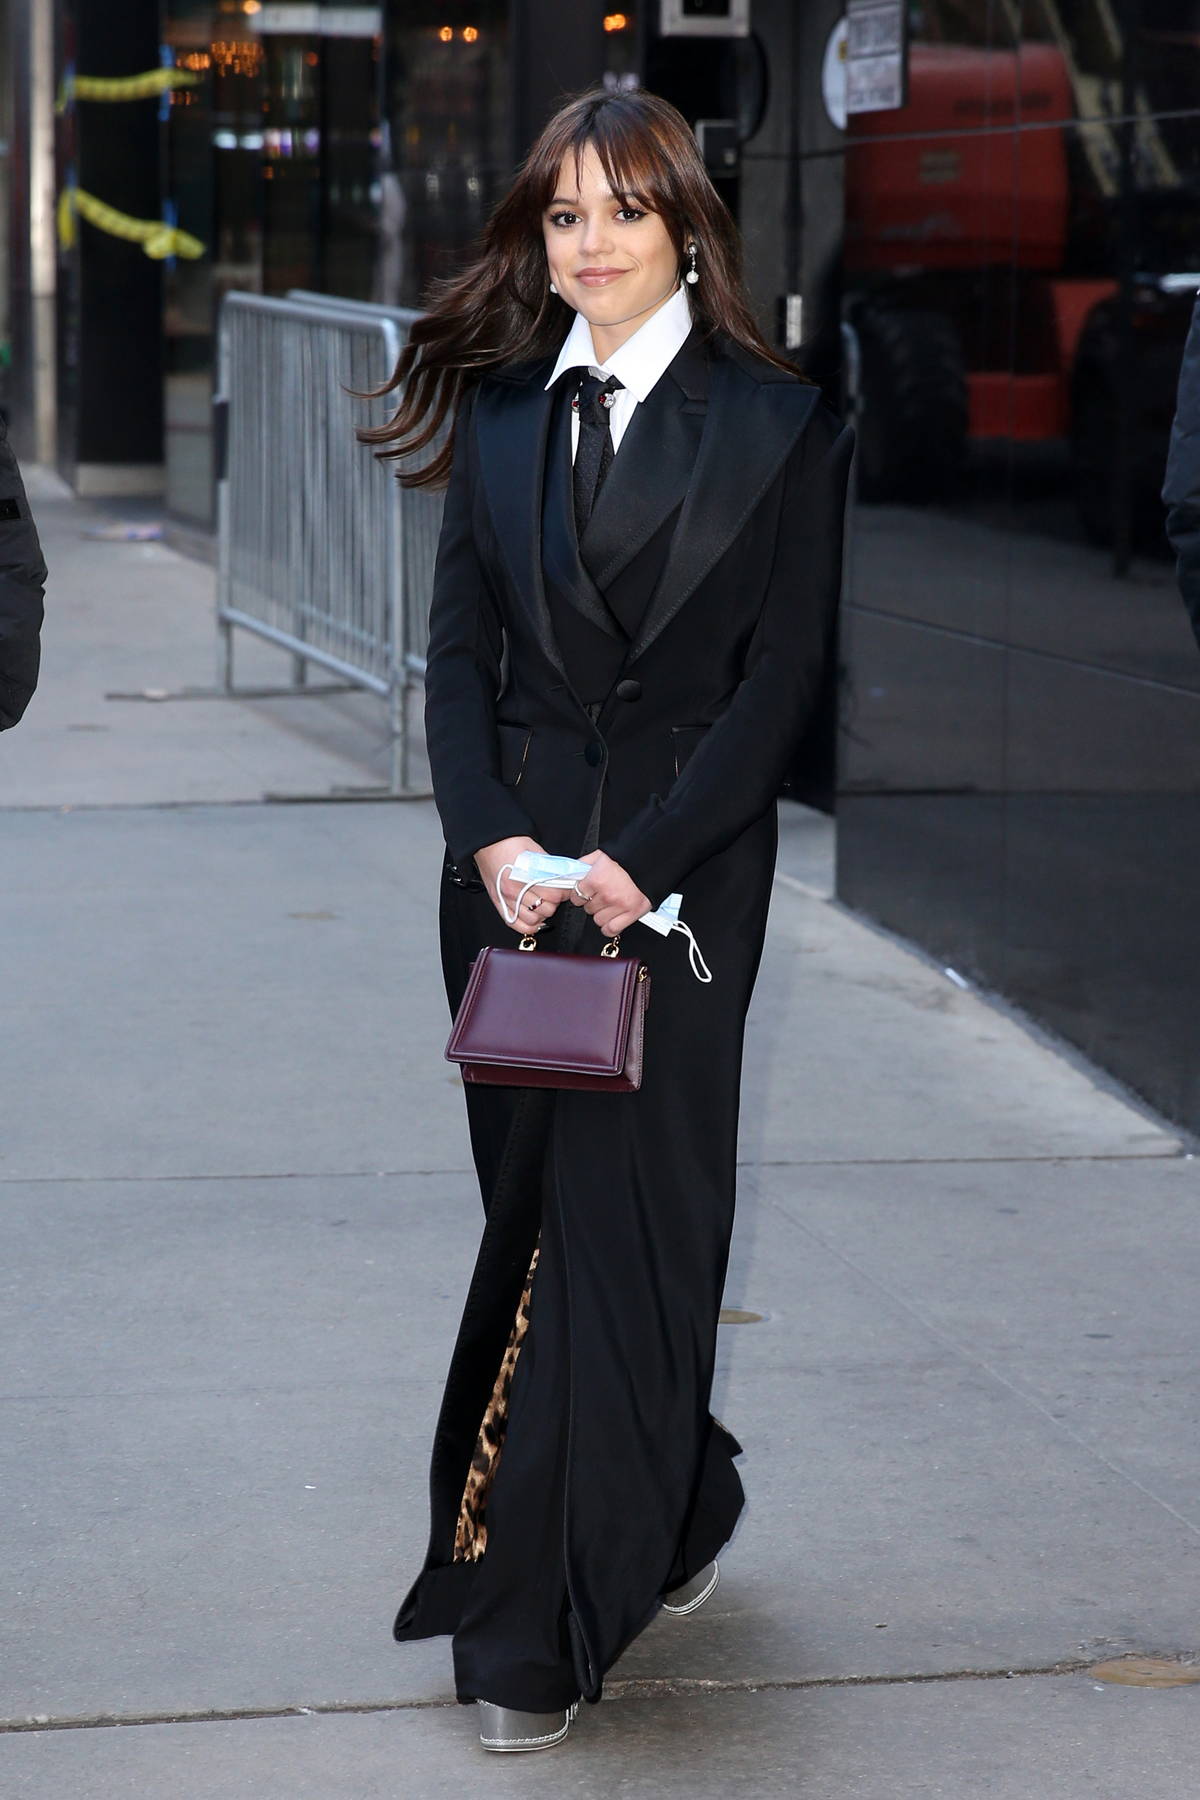 Jenna Ortega keeps it stylish in a full-length black coat while visiting  'Good Morning America